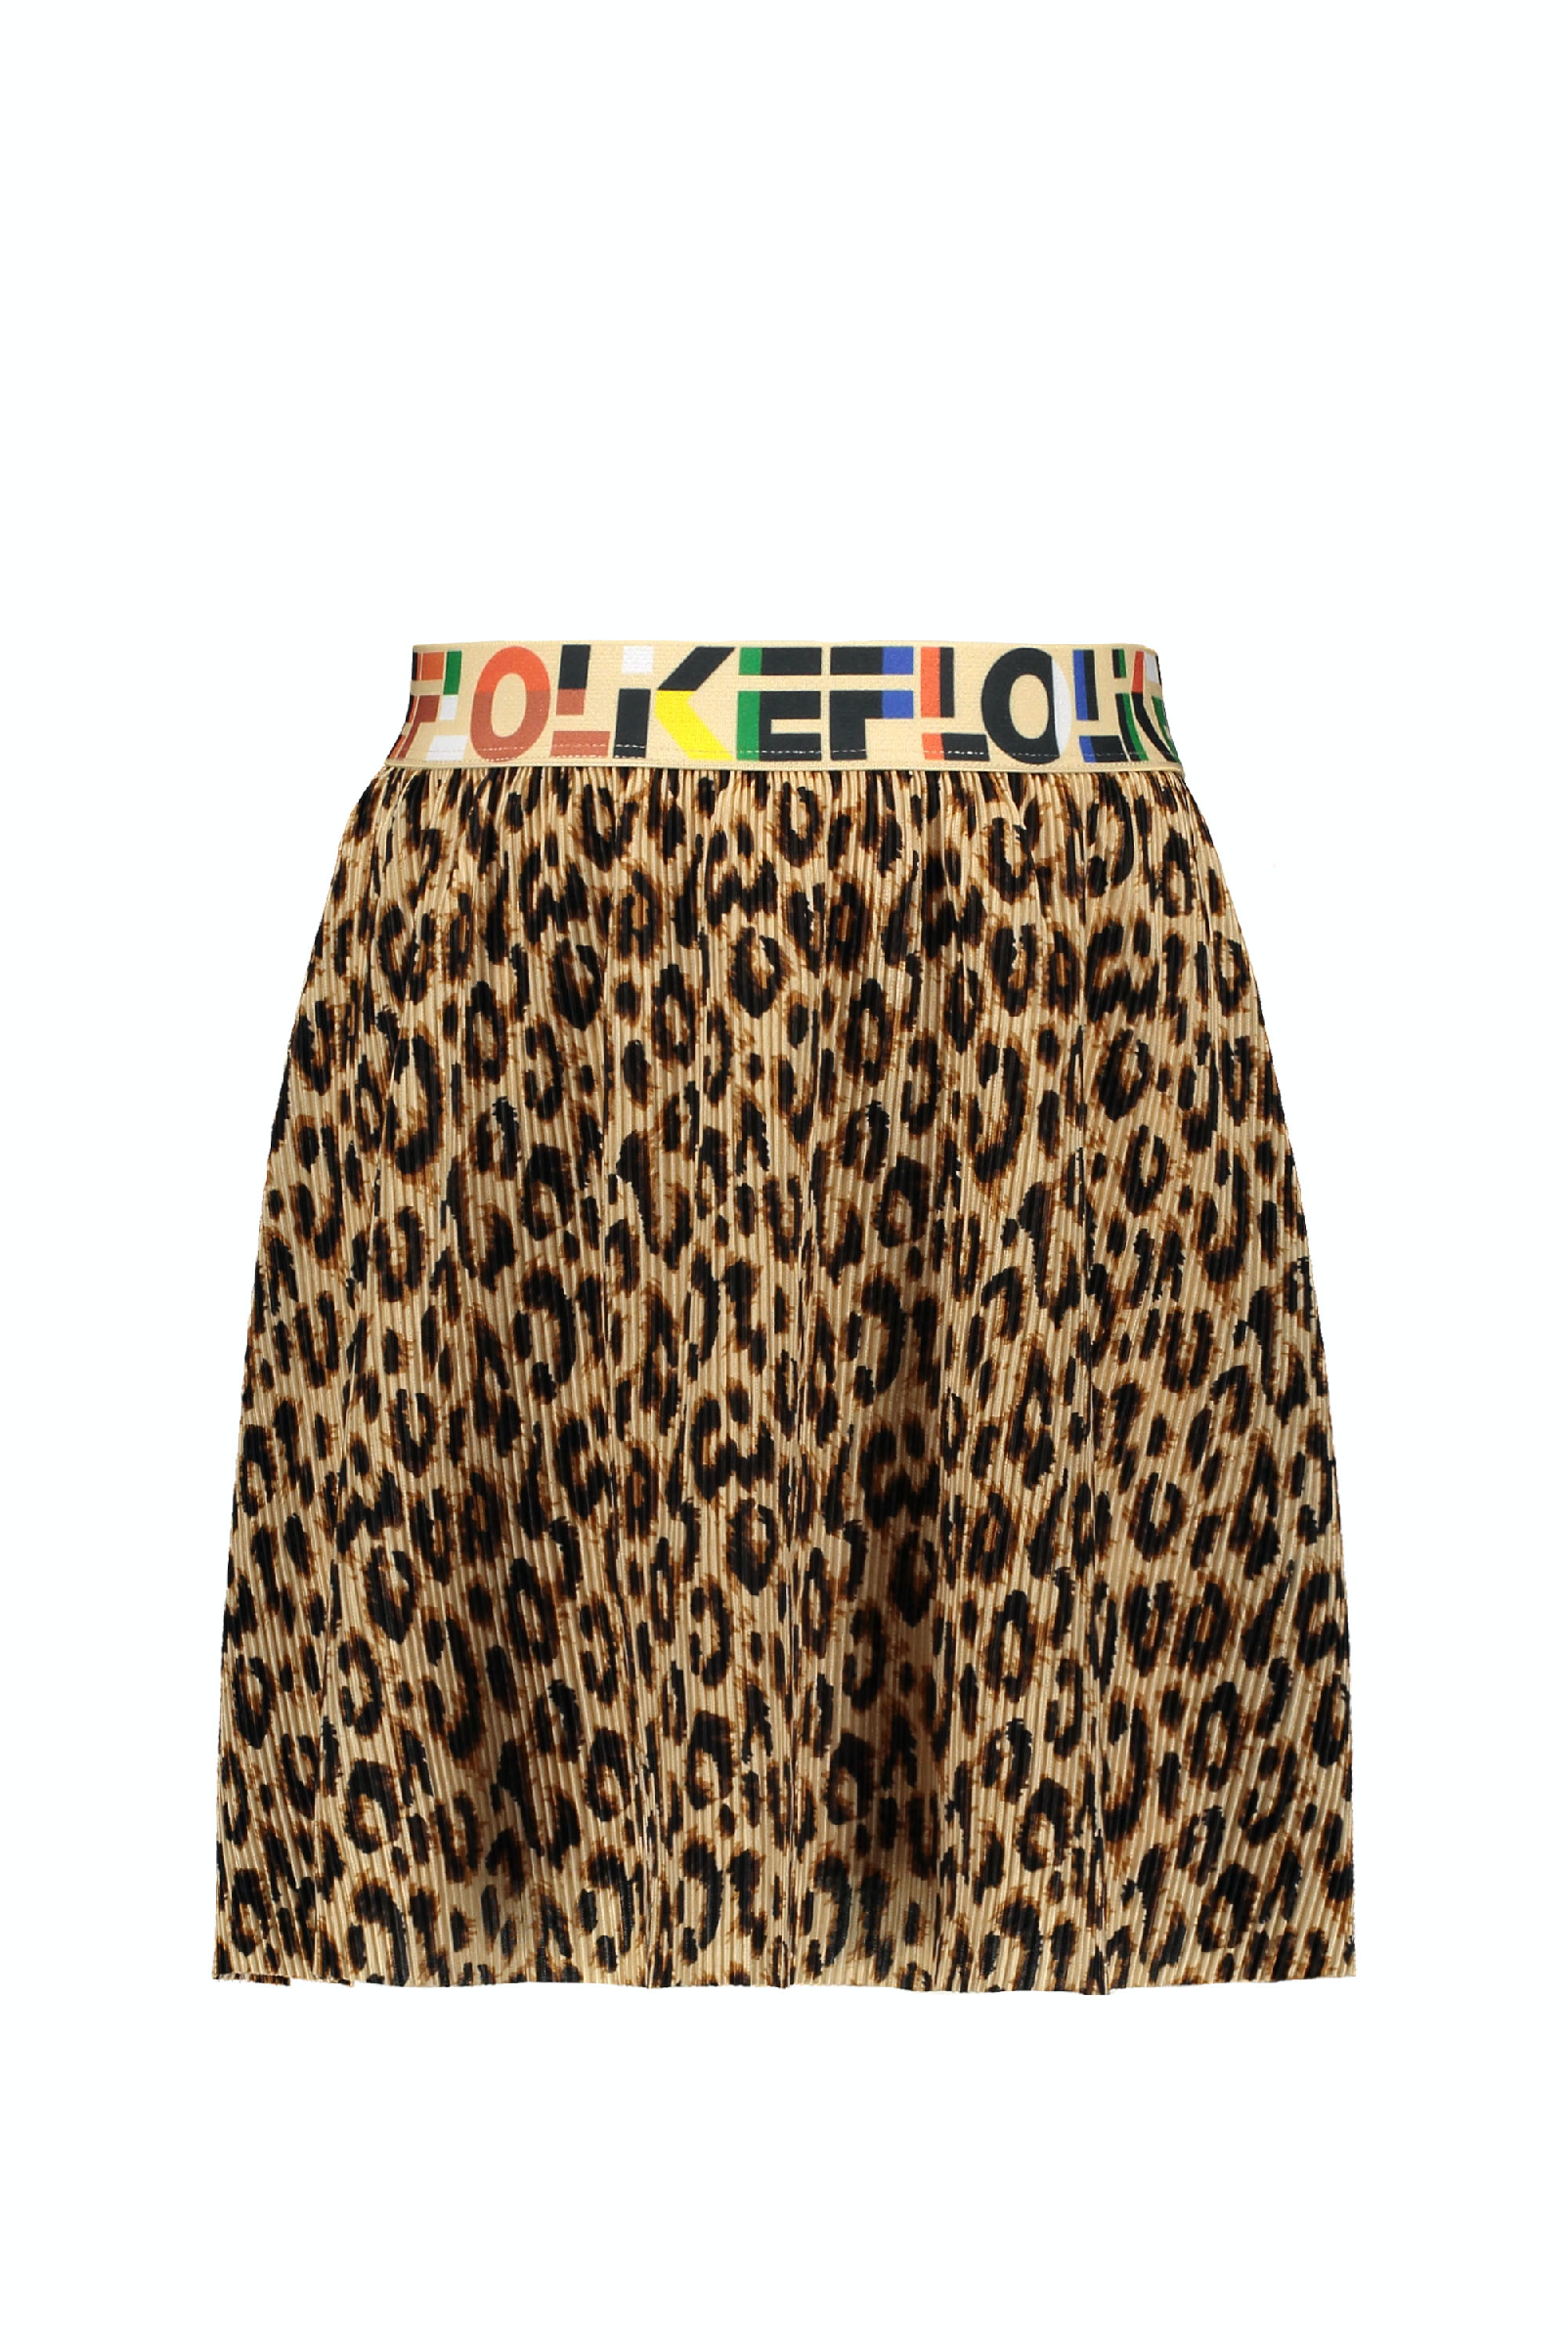 Meisjes Flo girls fancy plisse skirt van Flo in de kleur Animal in maat 152.